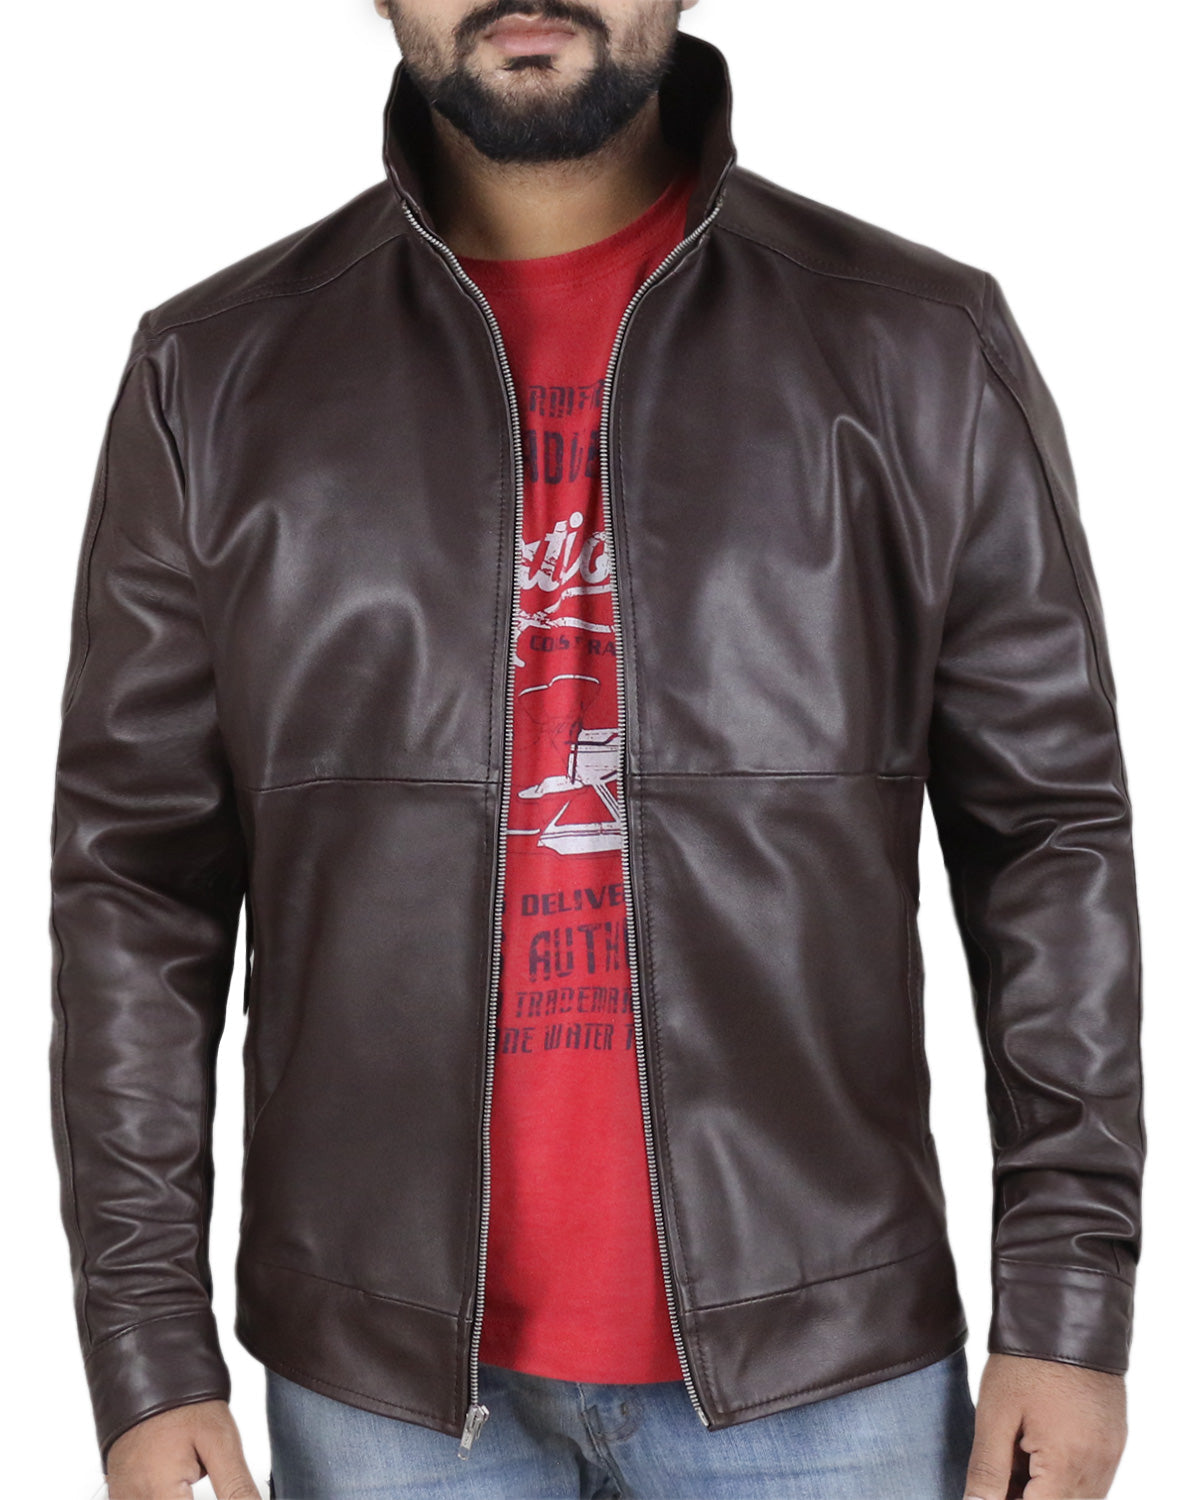 Leather Jackets Hub Mens Genuine Lambskin Leather Jacket (Black, Racer Jacket) - 1501462